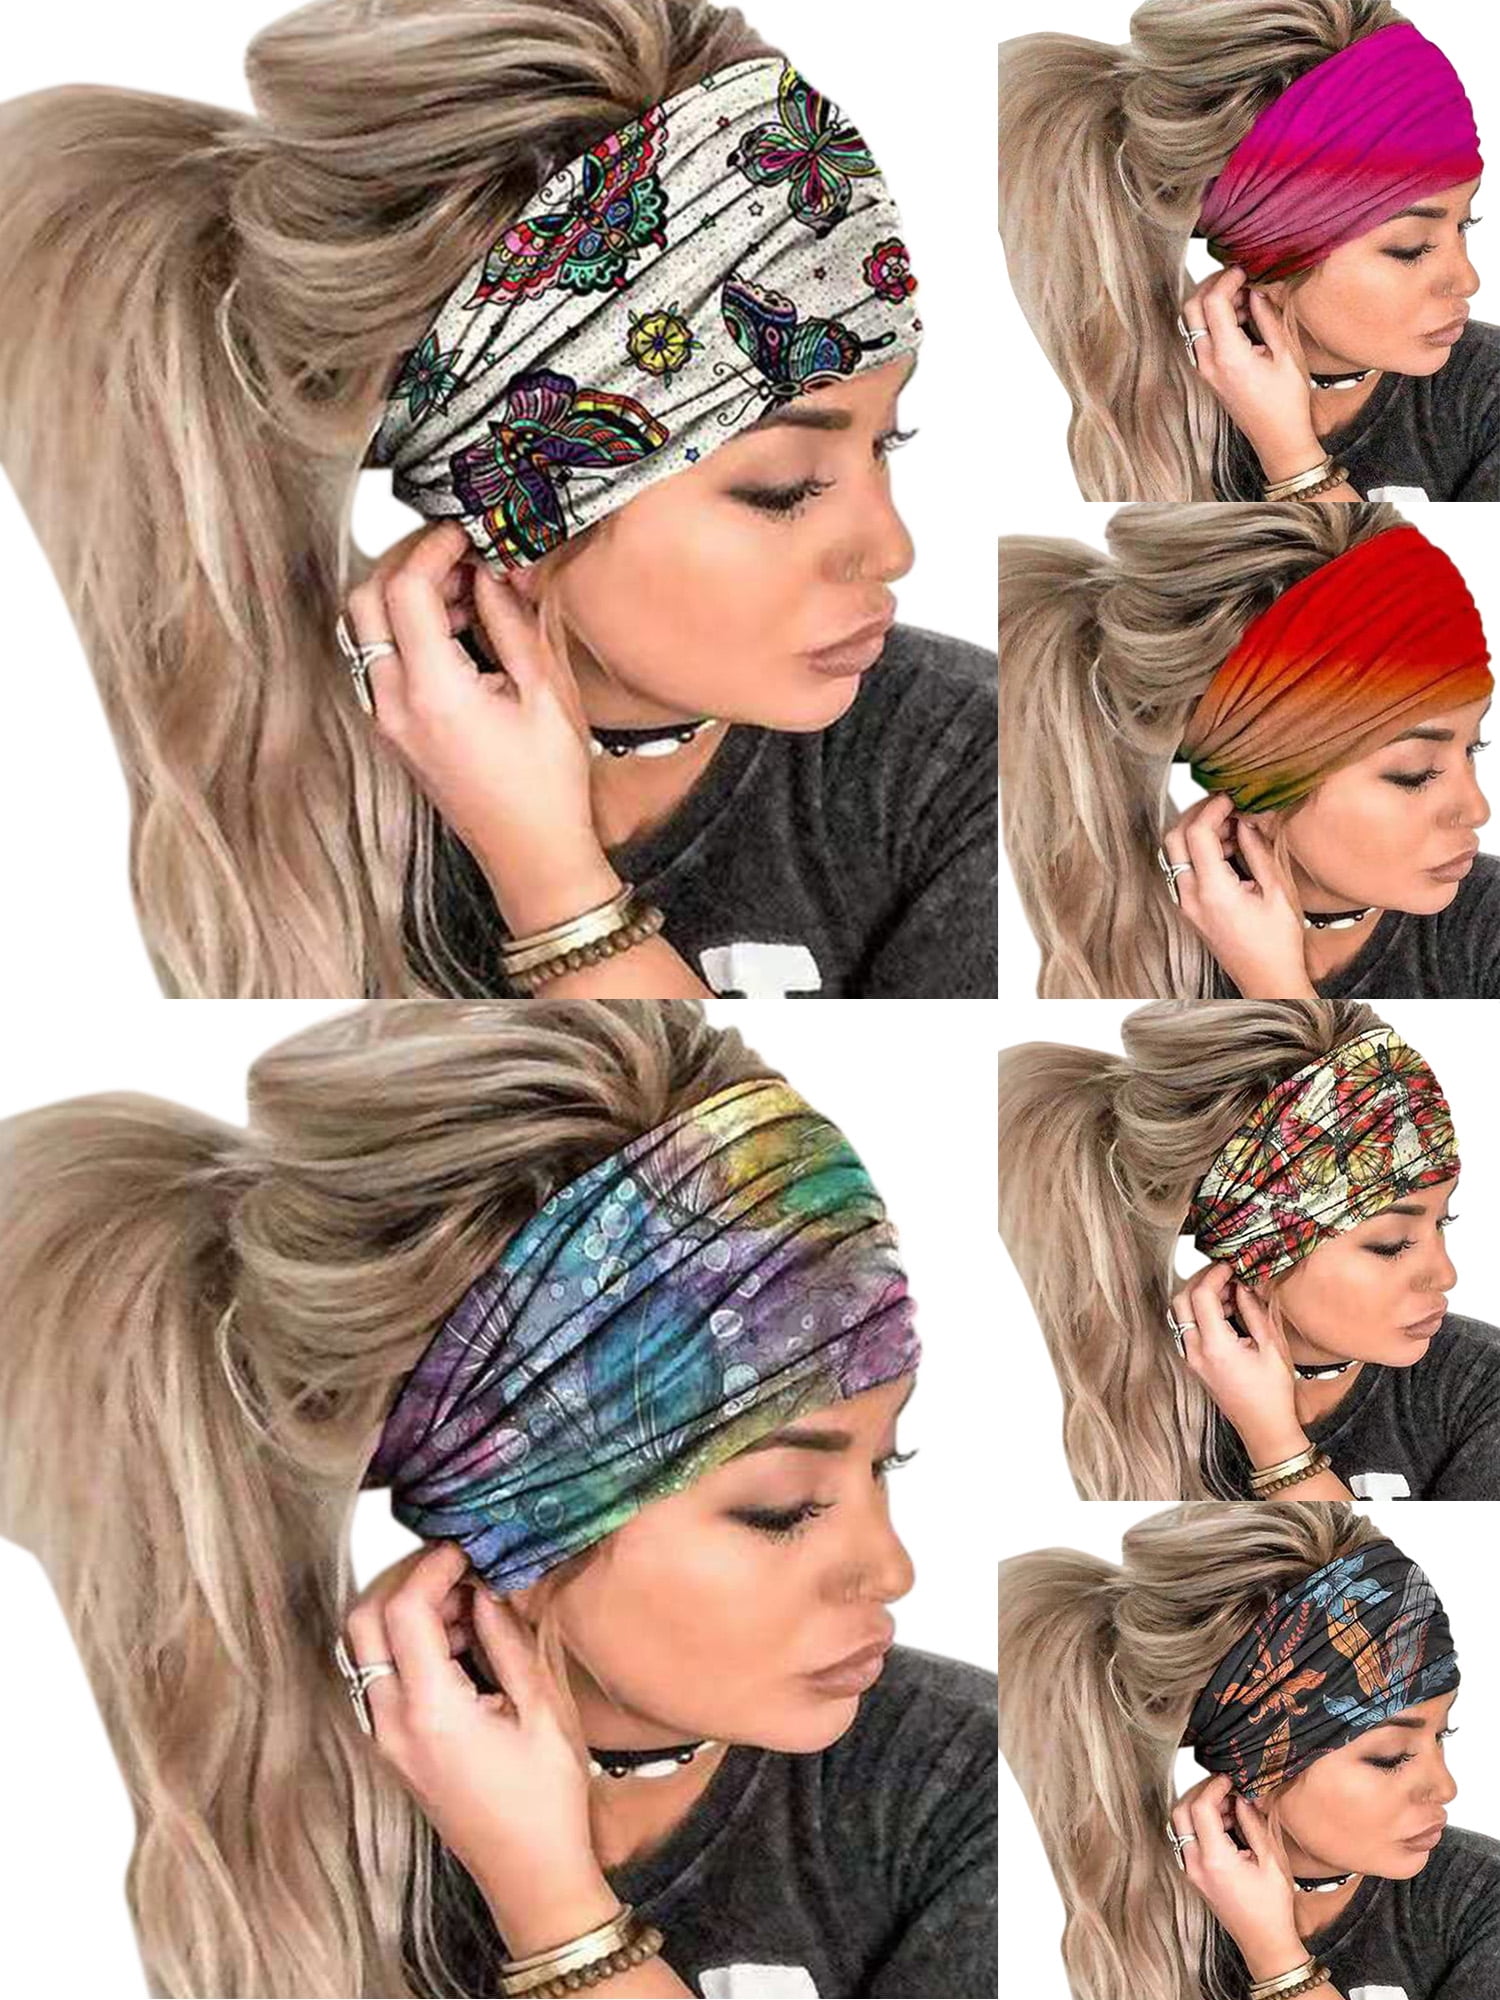 Choose color LIme Green Bandana Headband Dolly Bow Headband Summer Fashion Accessories Women Headscarf Tie up headband